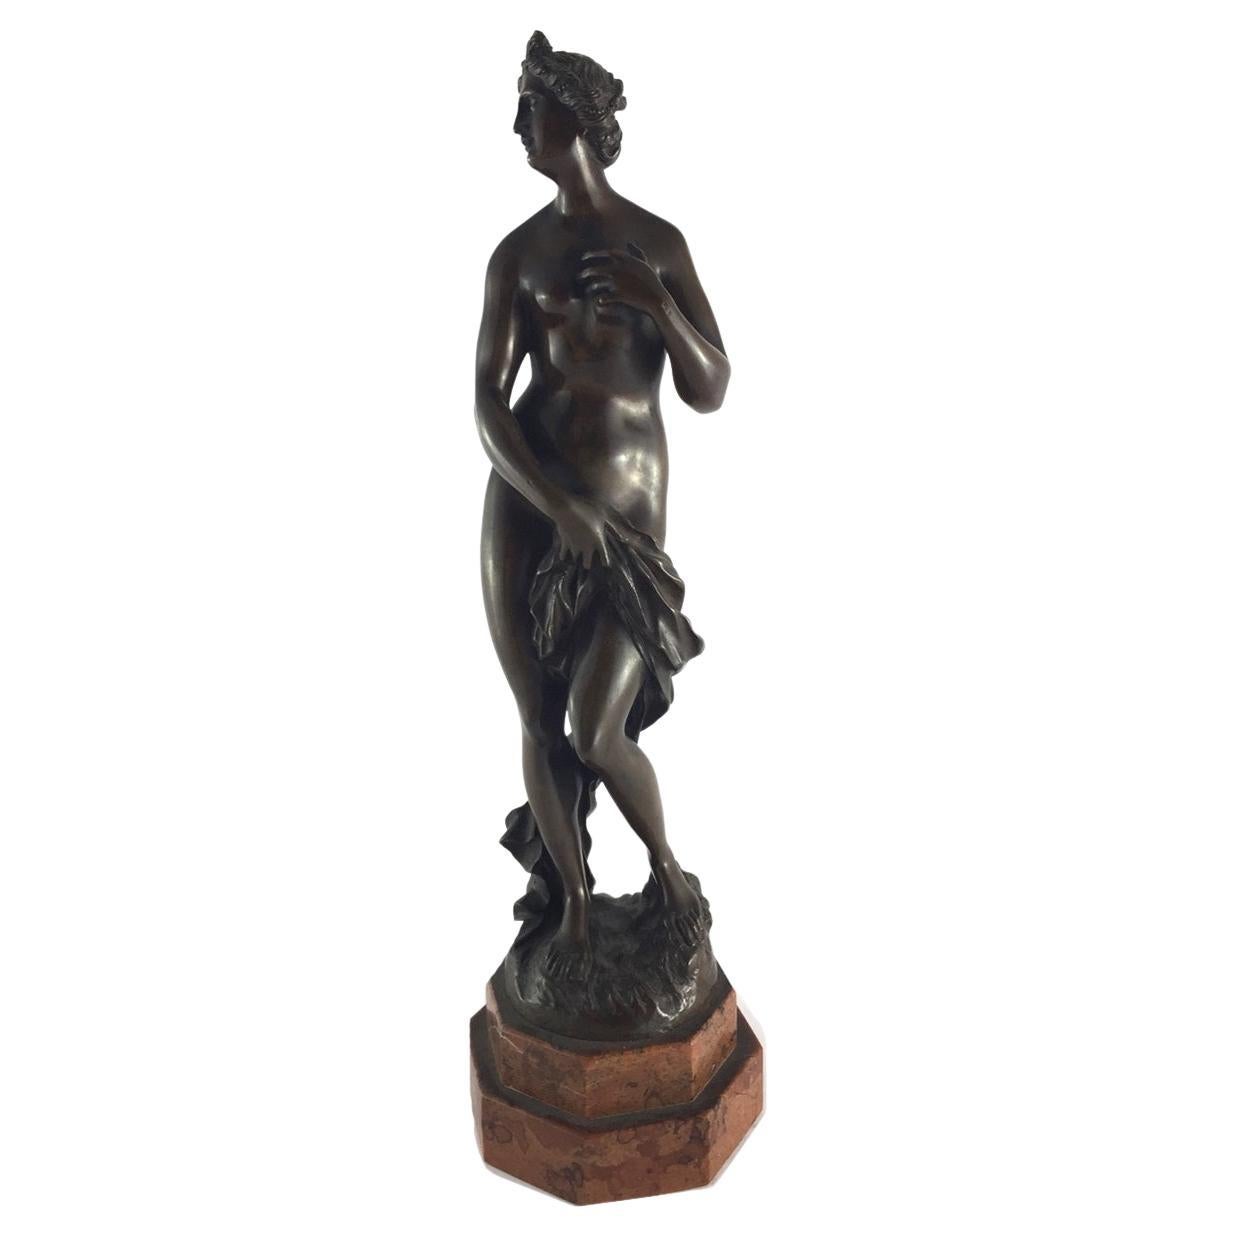 19th Century Bronze Scuplture "Venus Bather" by H.S. München